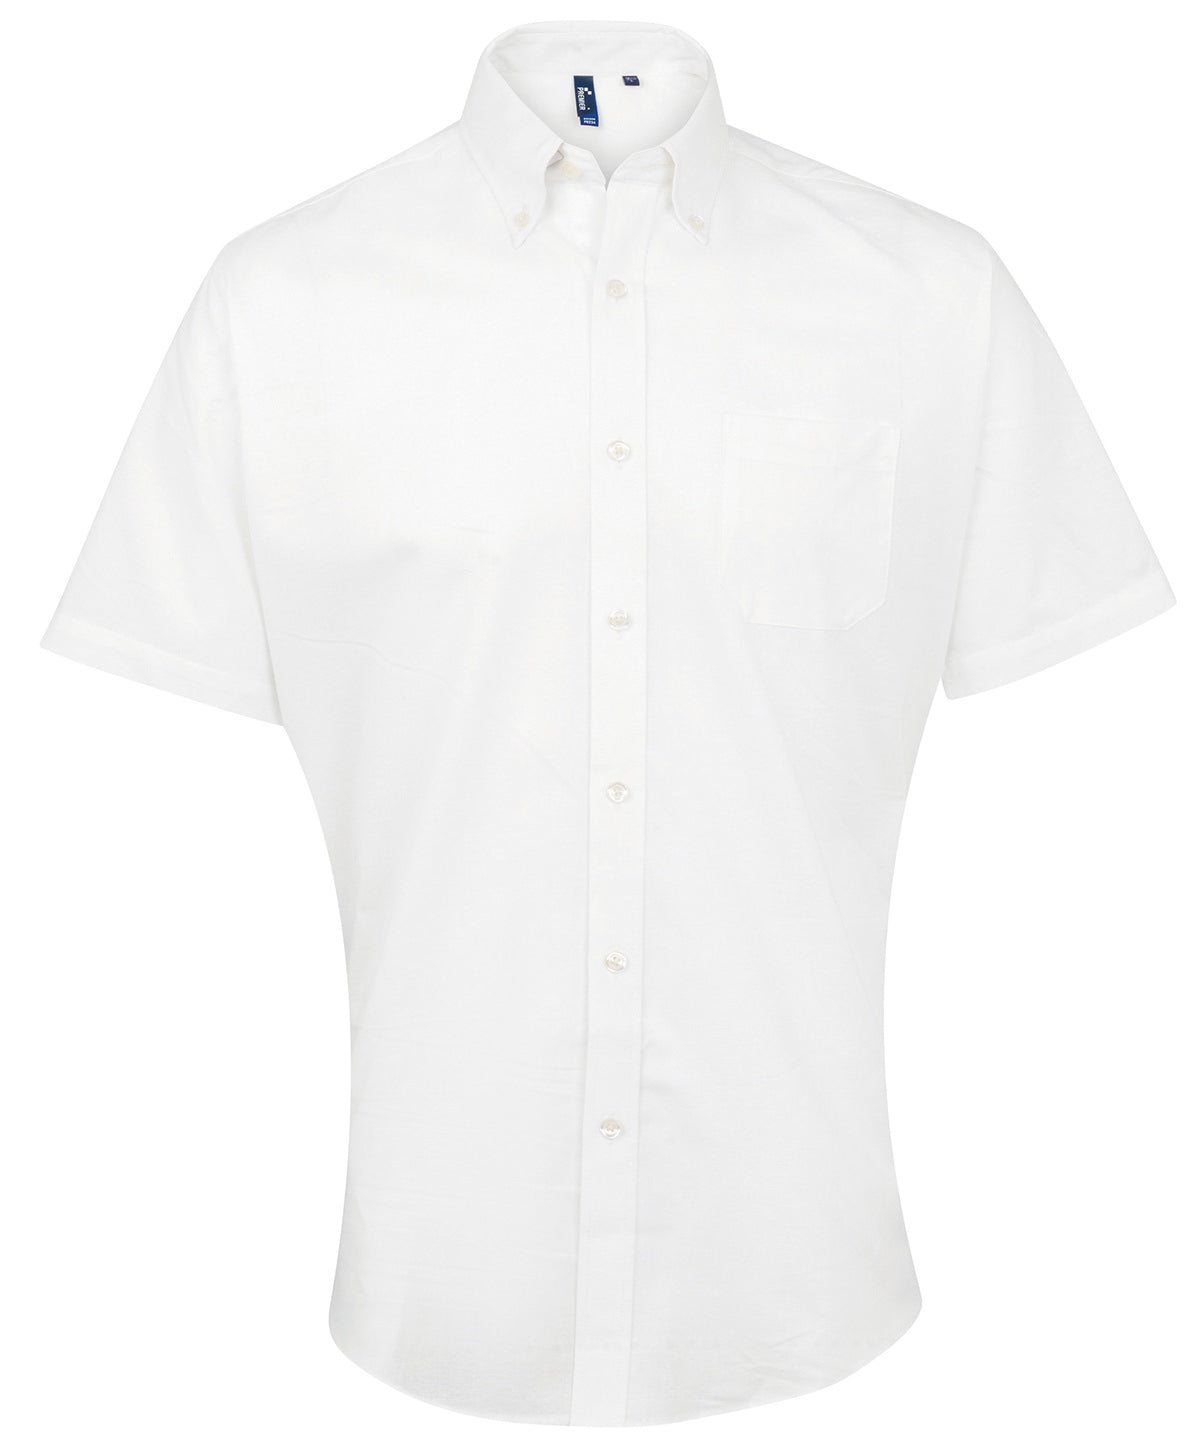 Bolir - Signature Oxford Short Sleeve Shirt